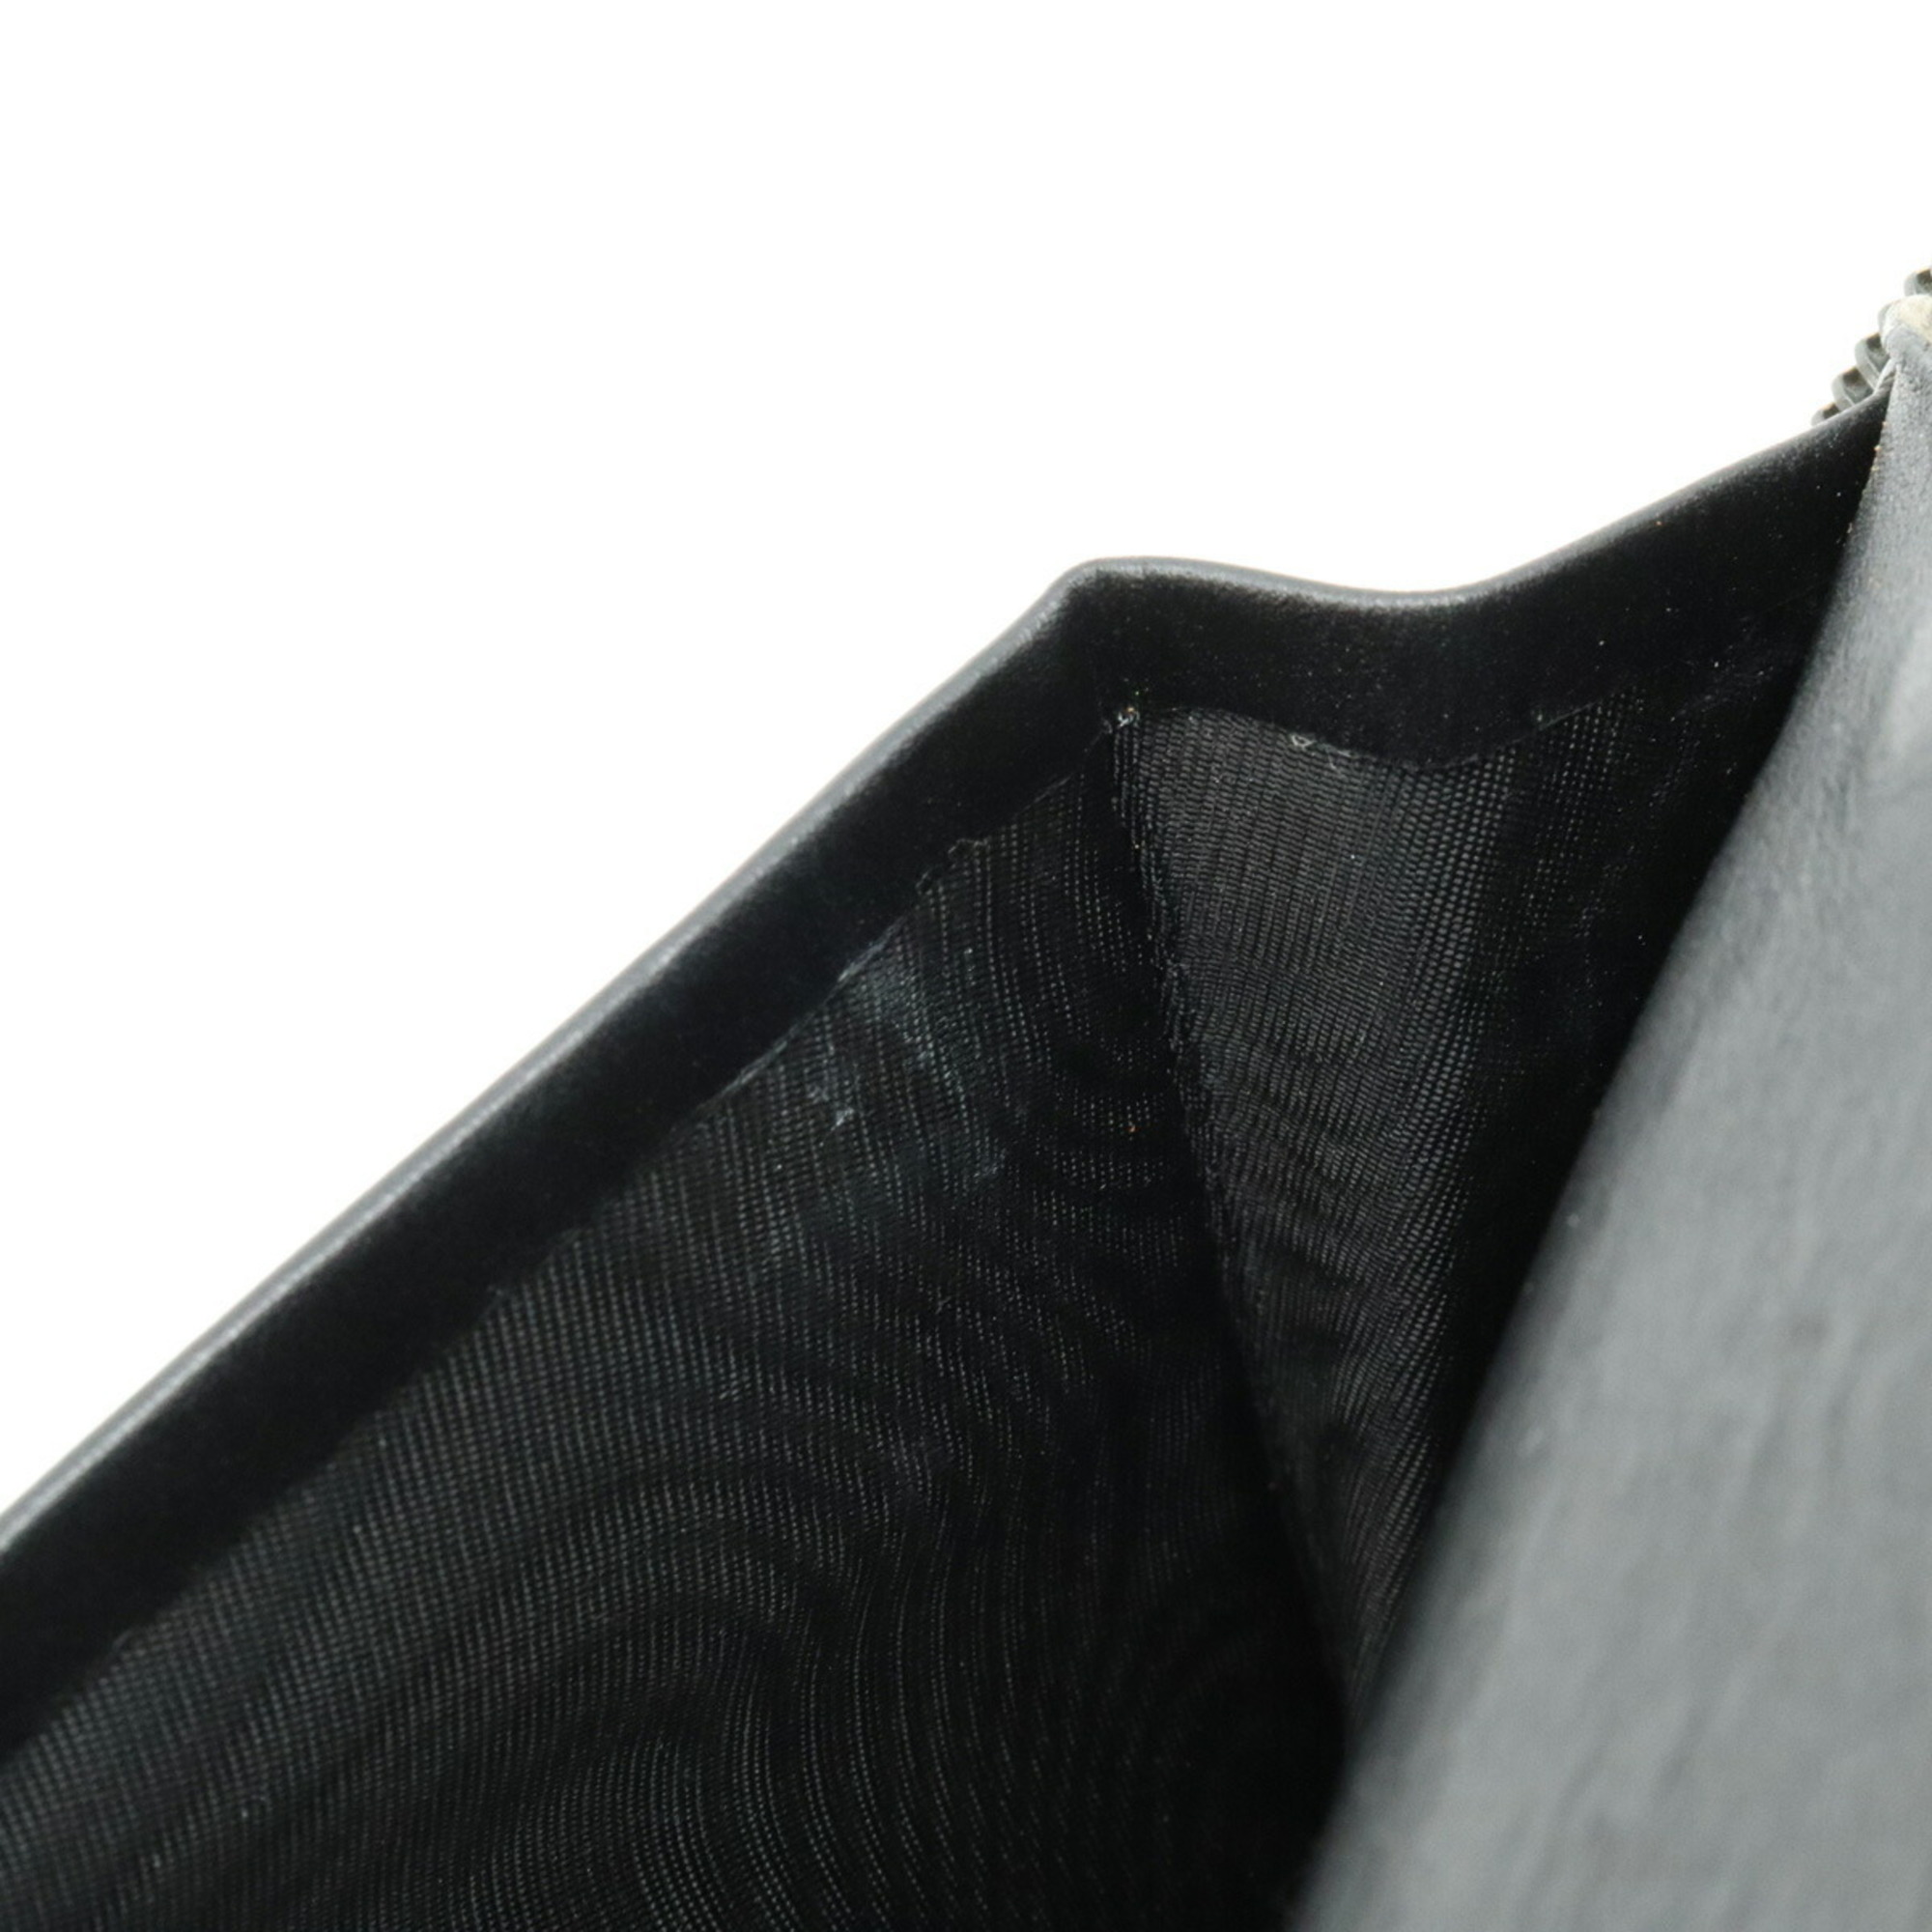 BOTTEGA VENETA Intrecciato Round Long Wallet Travel Case Calf Leather Black 169730